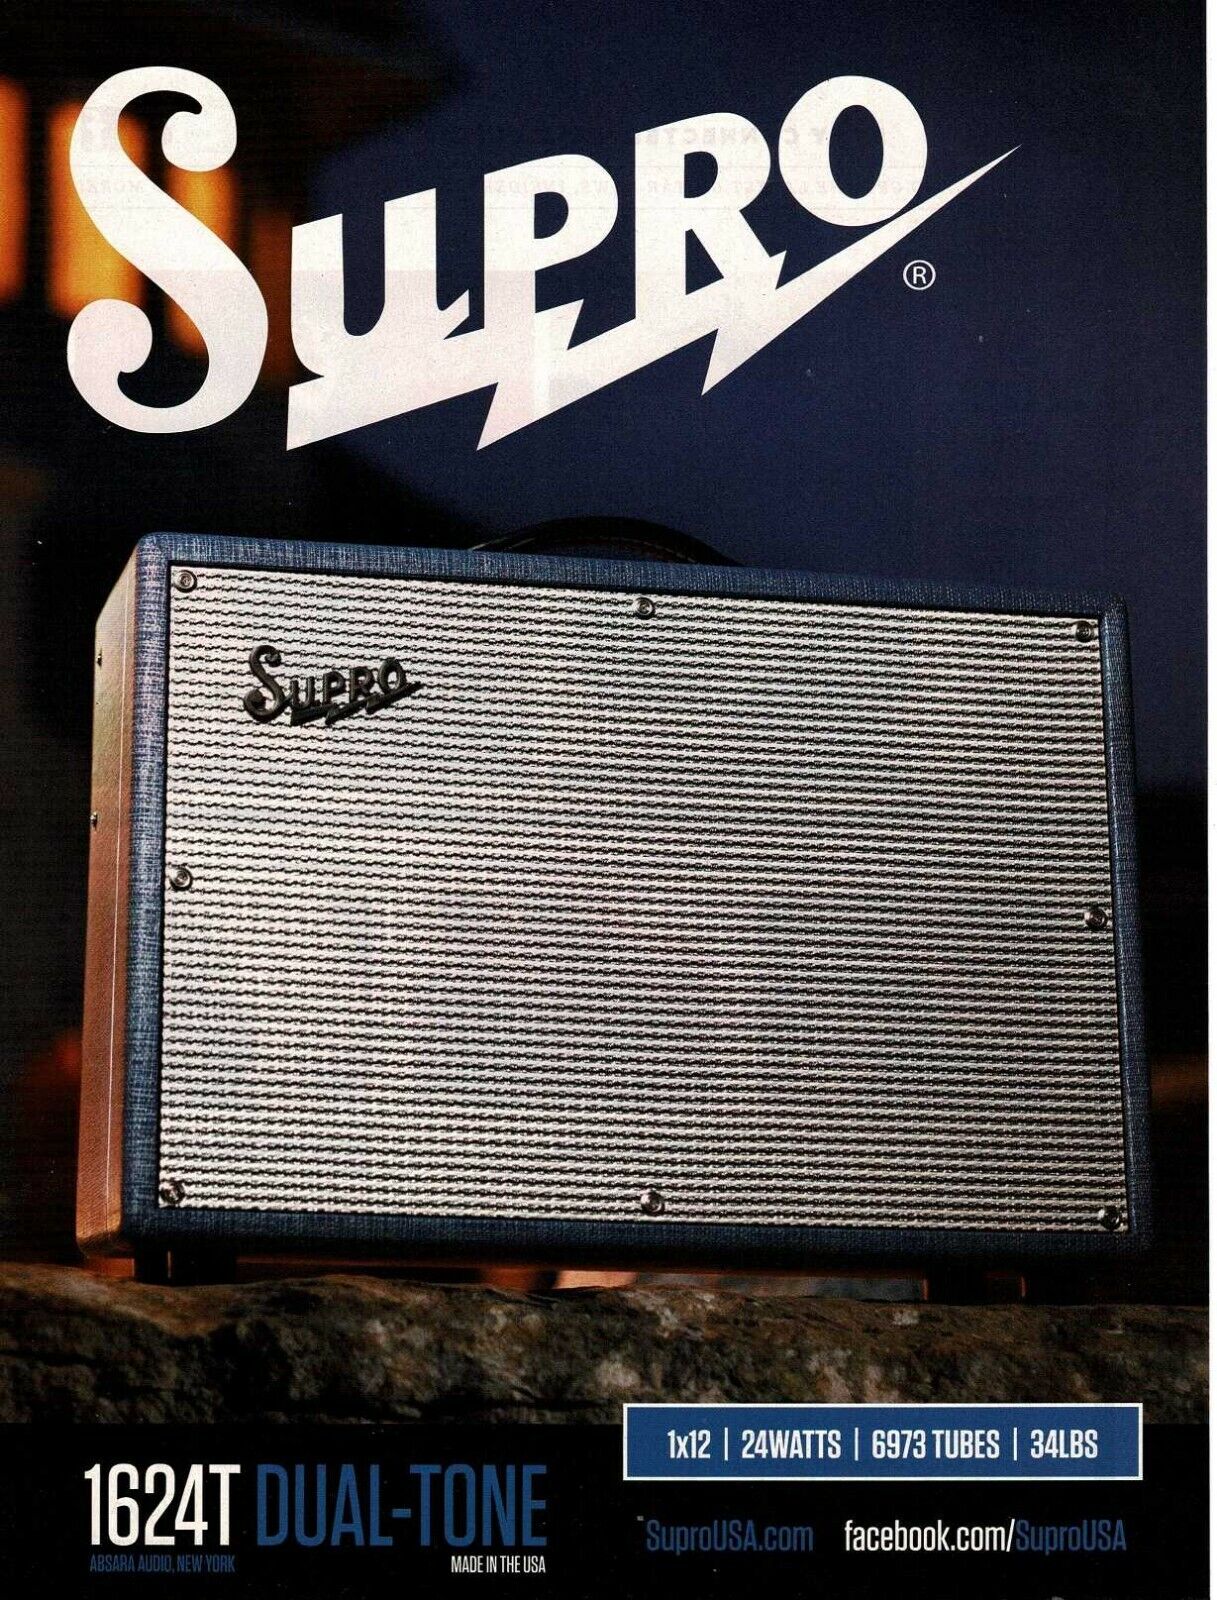 2014 SUPRO 1624T Dual-Tone Amplifier Amp magazine ad